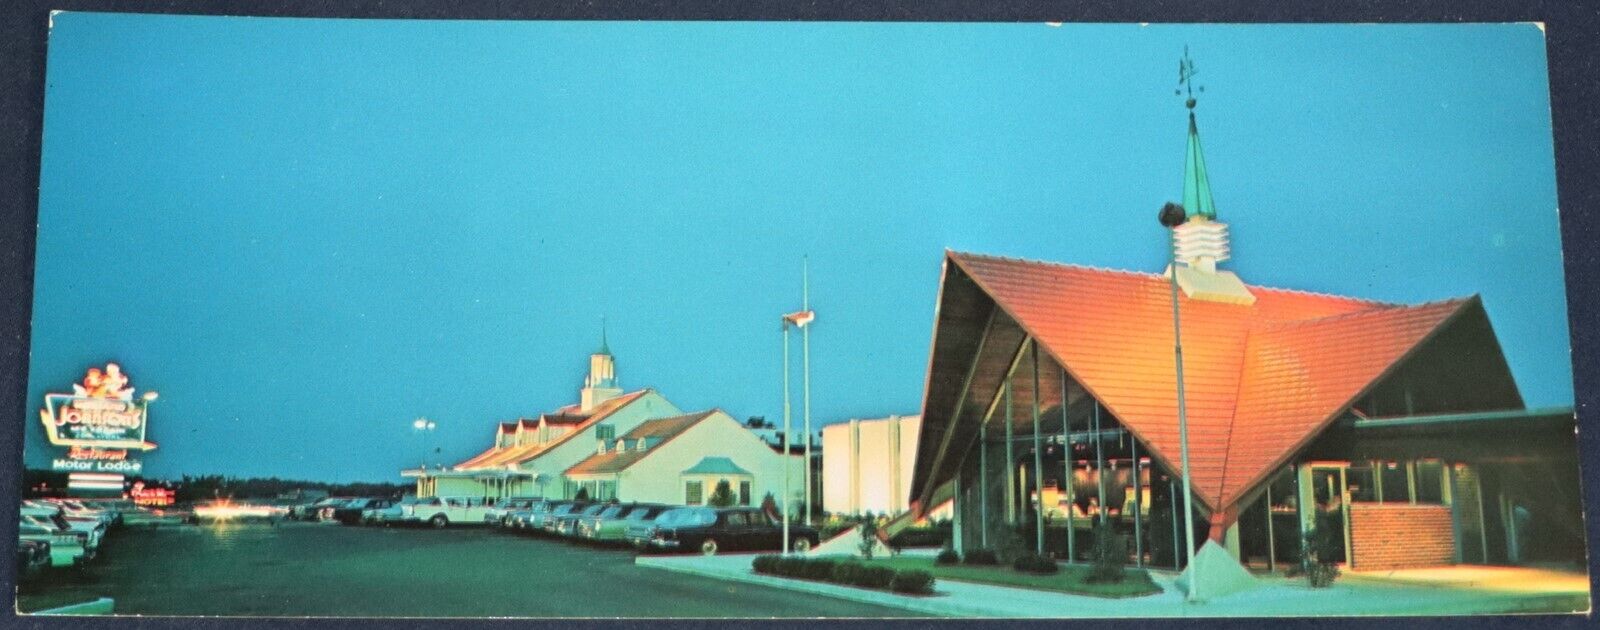 Howard Johnson\'s Motor Lodge, Woodbridge, NJ Postcard - Double Wide